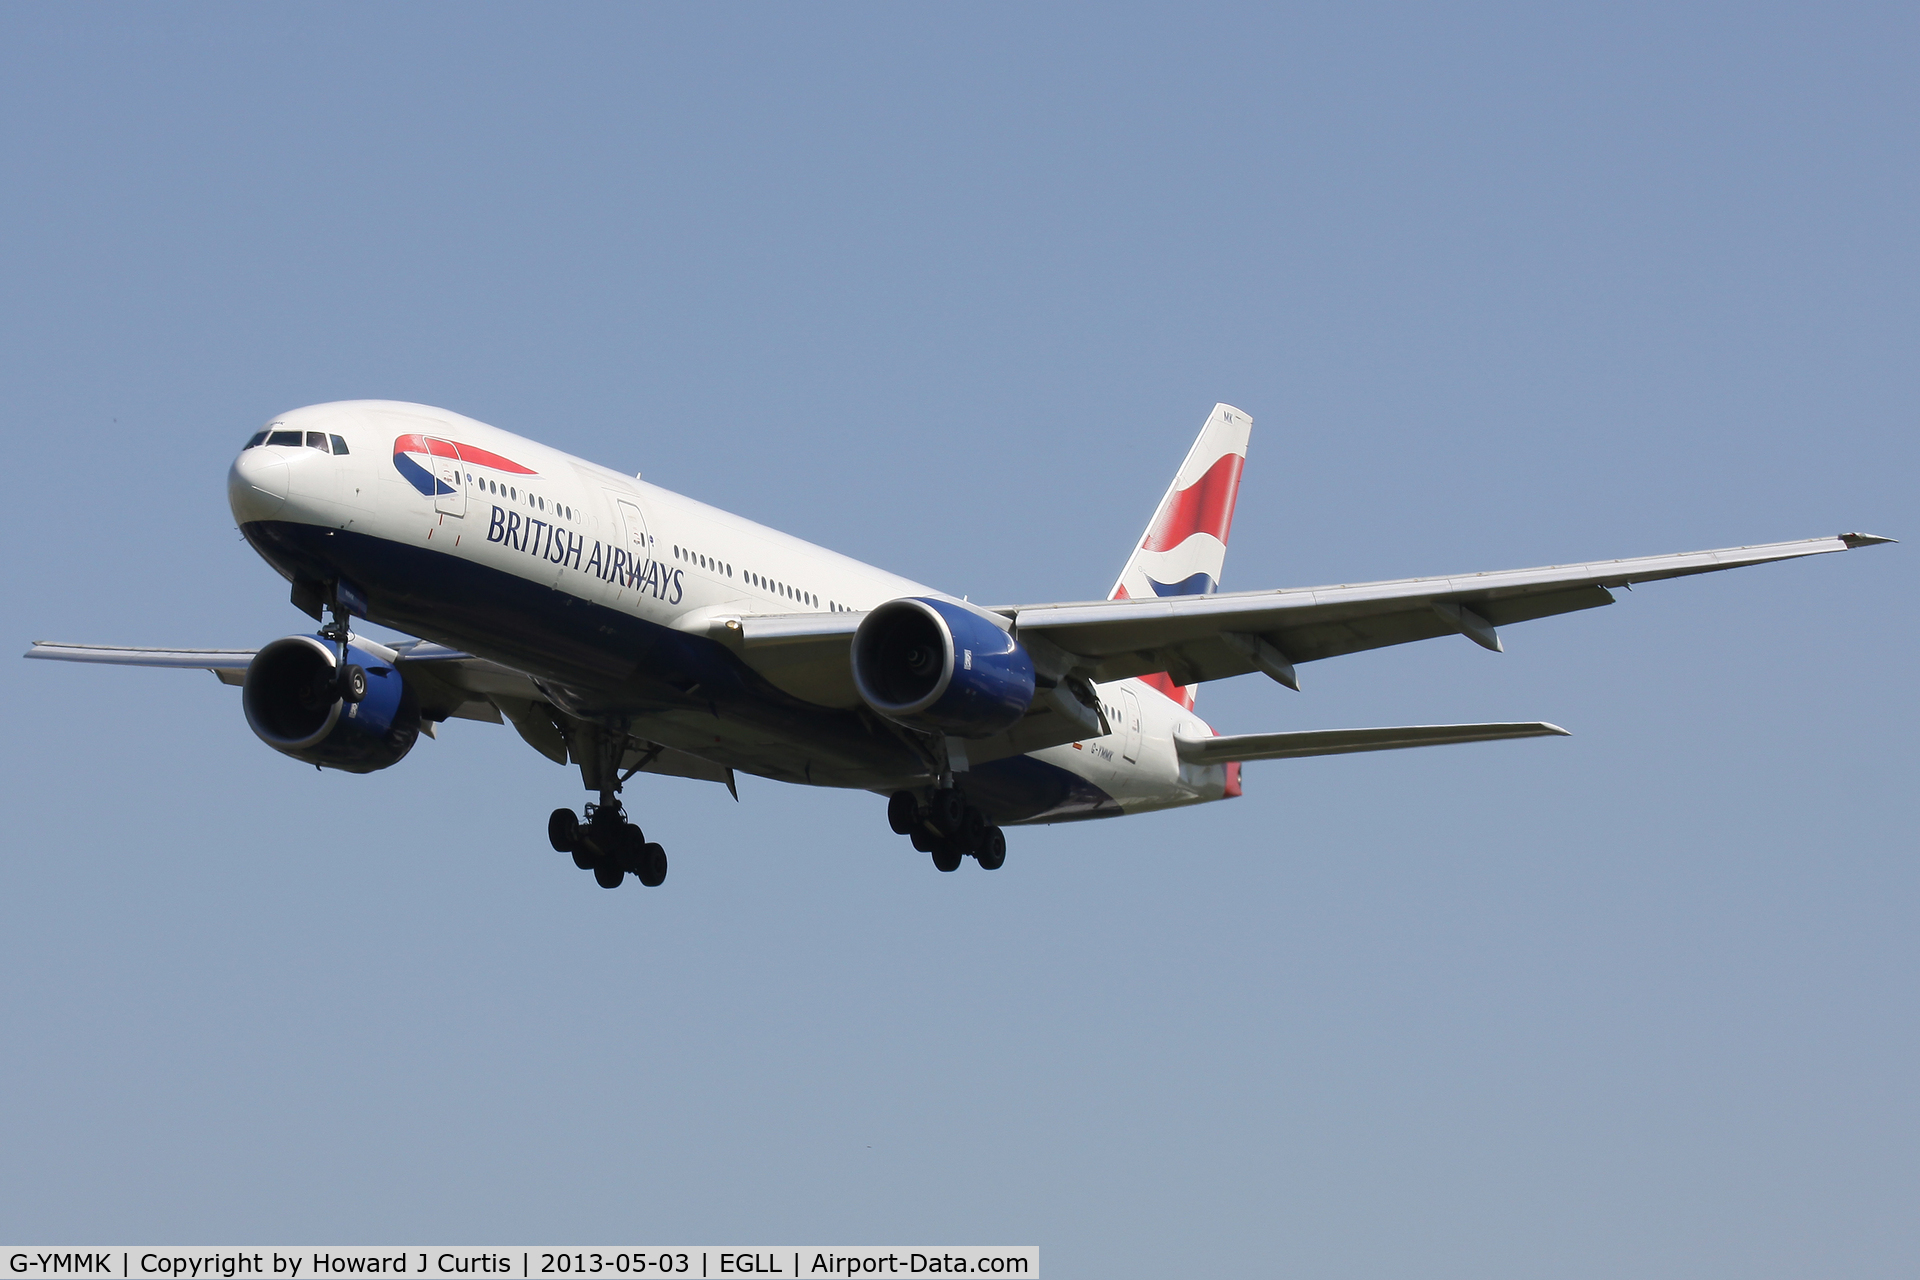 G-YMMK, 2000 Boeing 777-236 C/N 30312, British Airways, on approach to runway 27L.